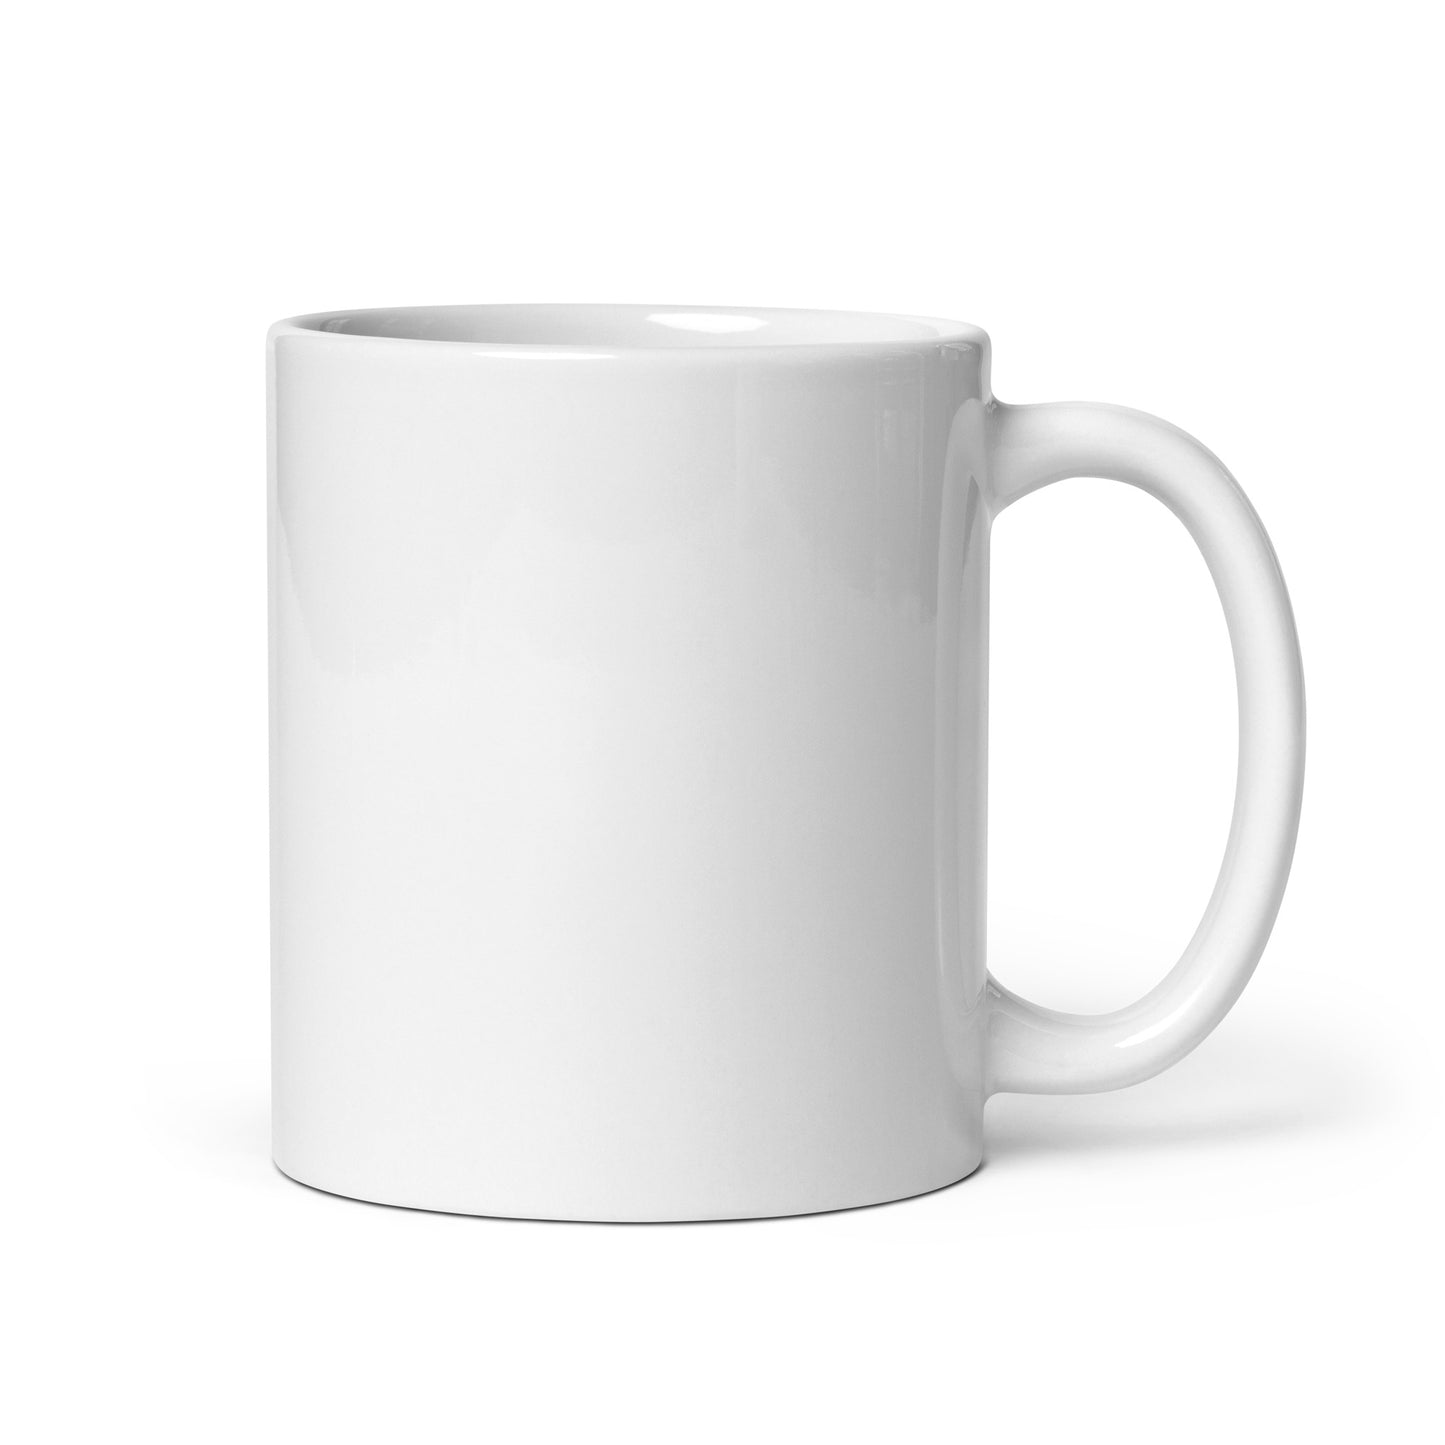 White glossy mug - Tidewell Foundation